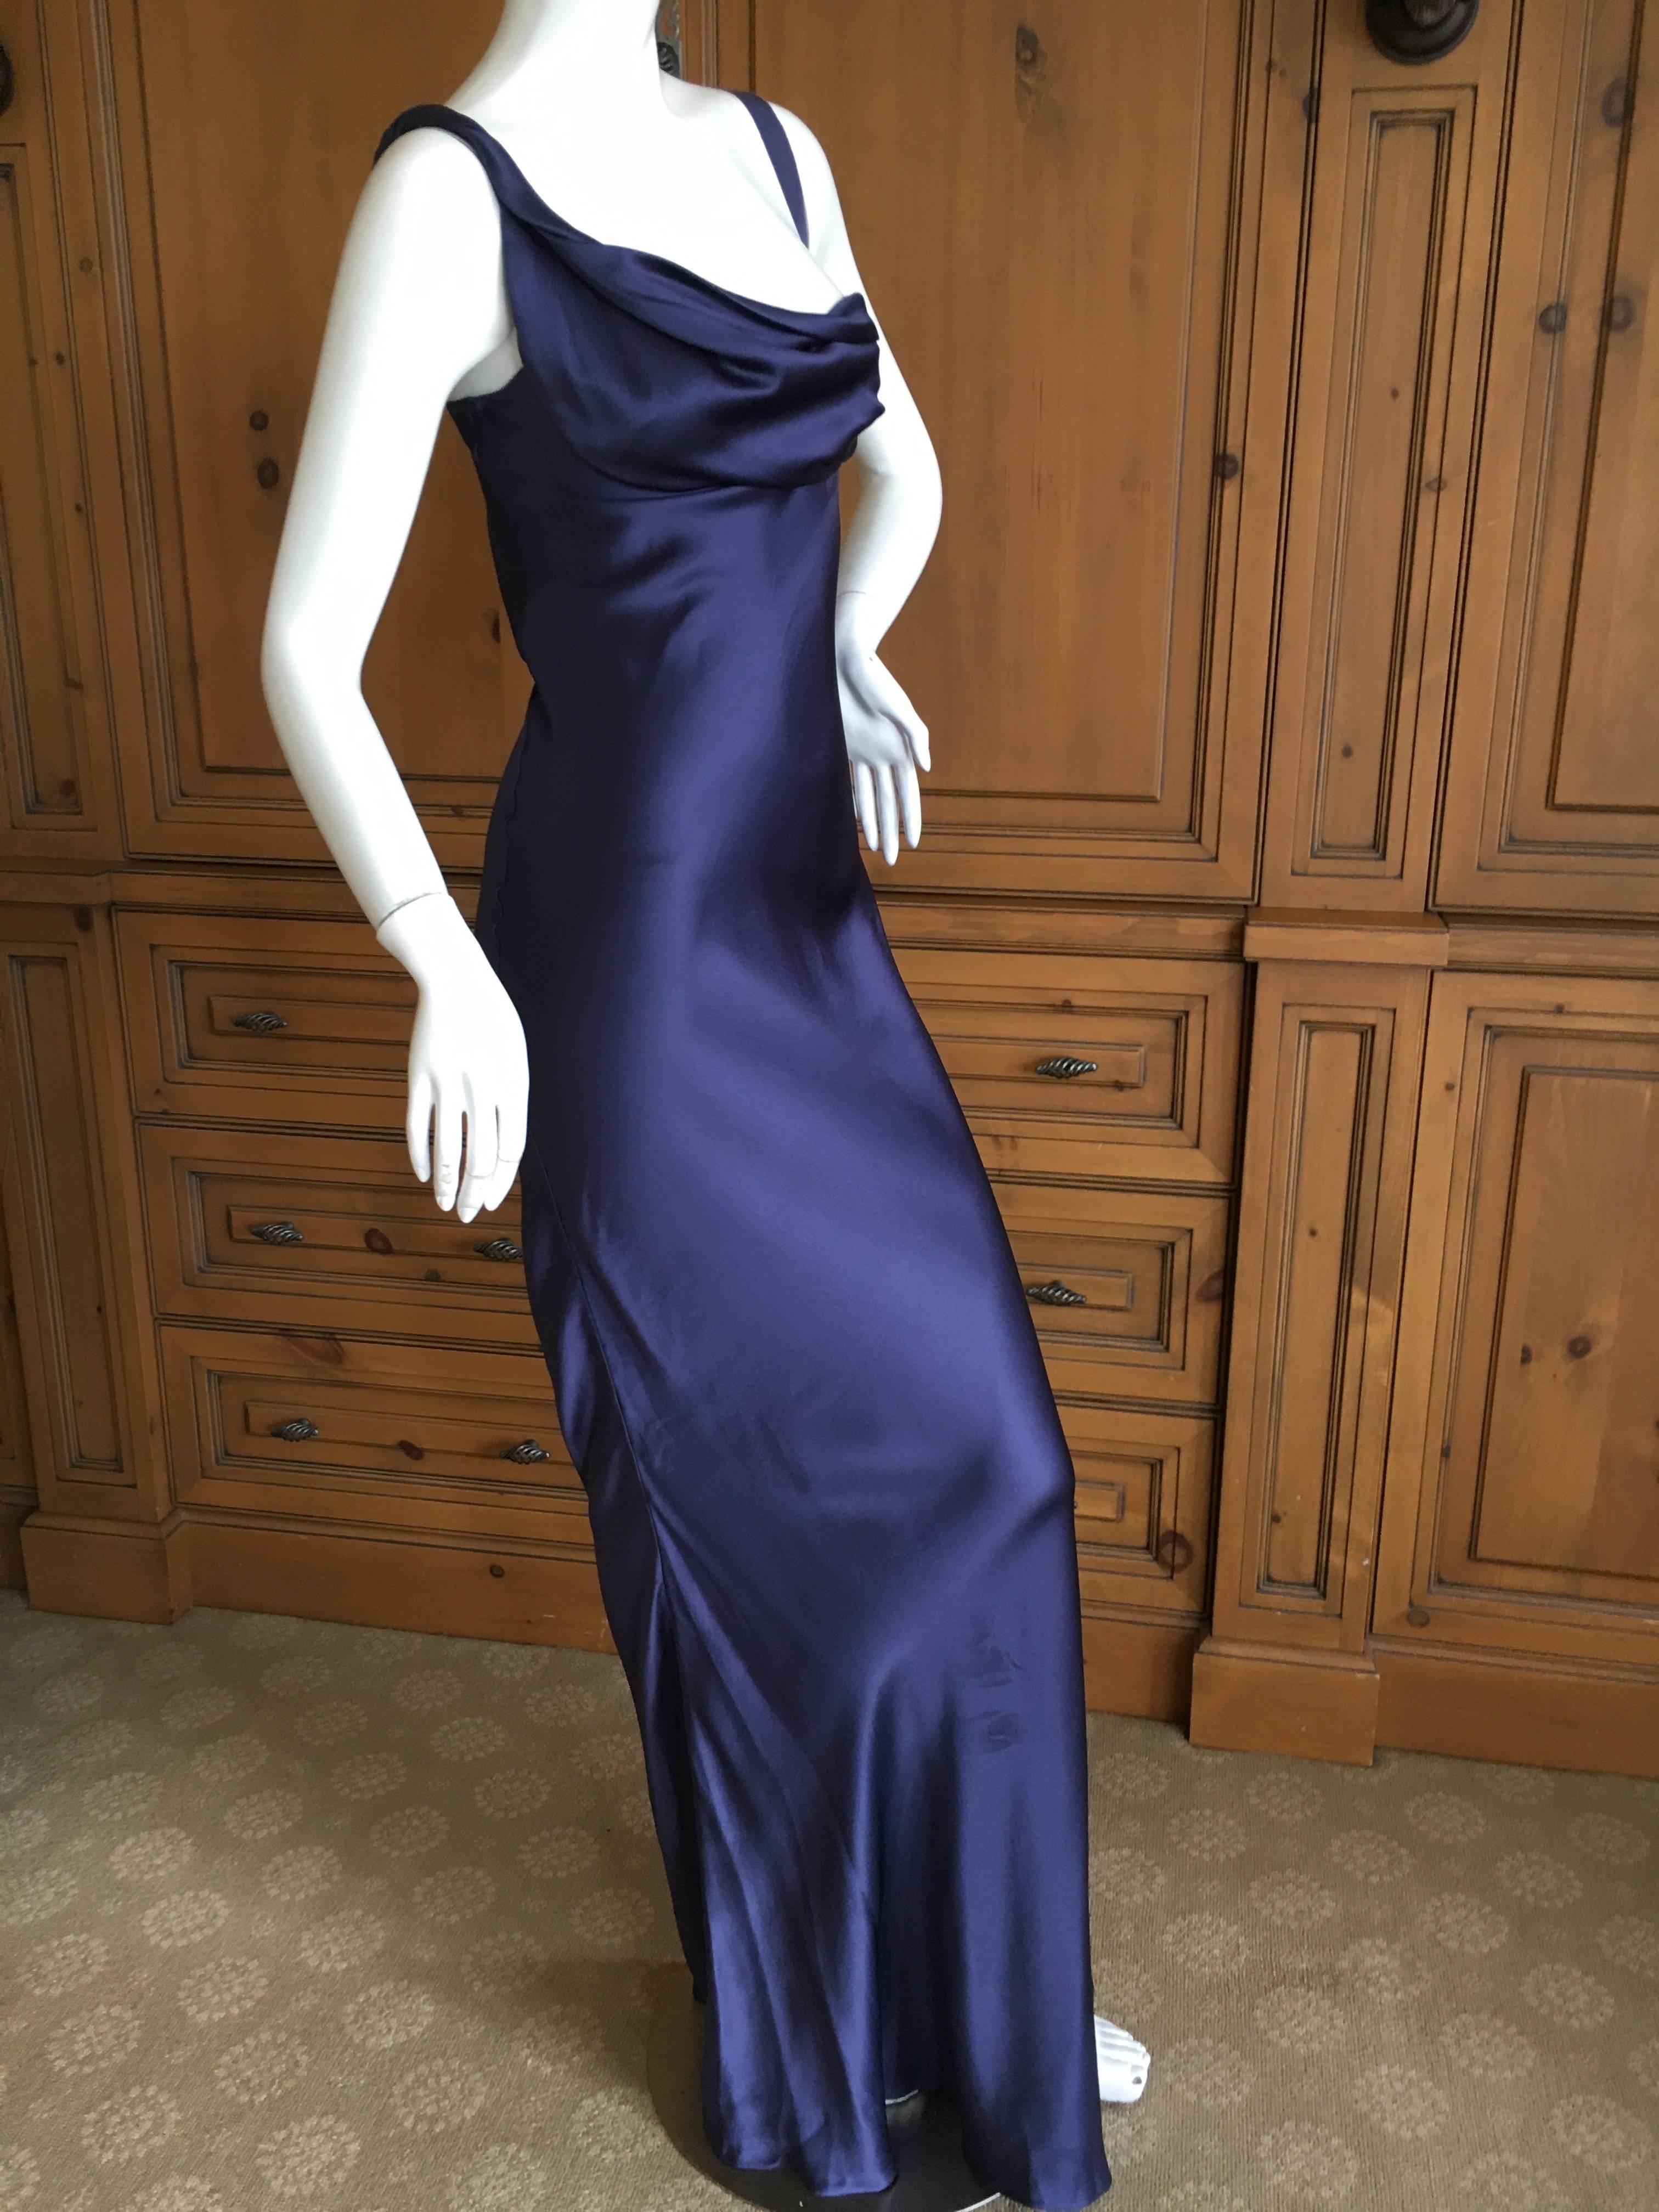 John Galliano Gorgeous Purple Bias Cut Evening Dress.
Early 2000's.
Size 38
Bust 36"
Waist 28"
Hips 41"
Length 62"
Excellent condition